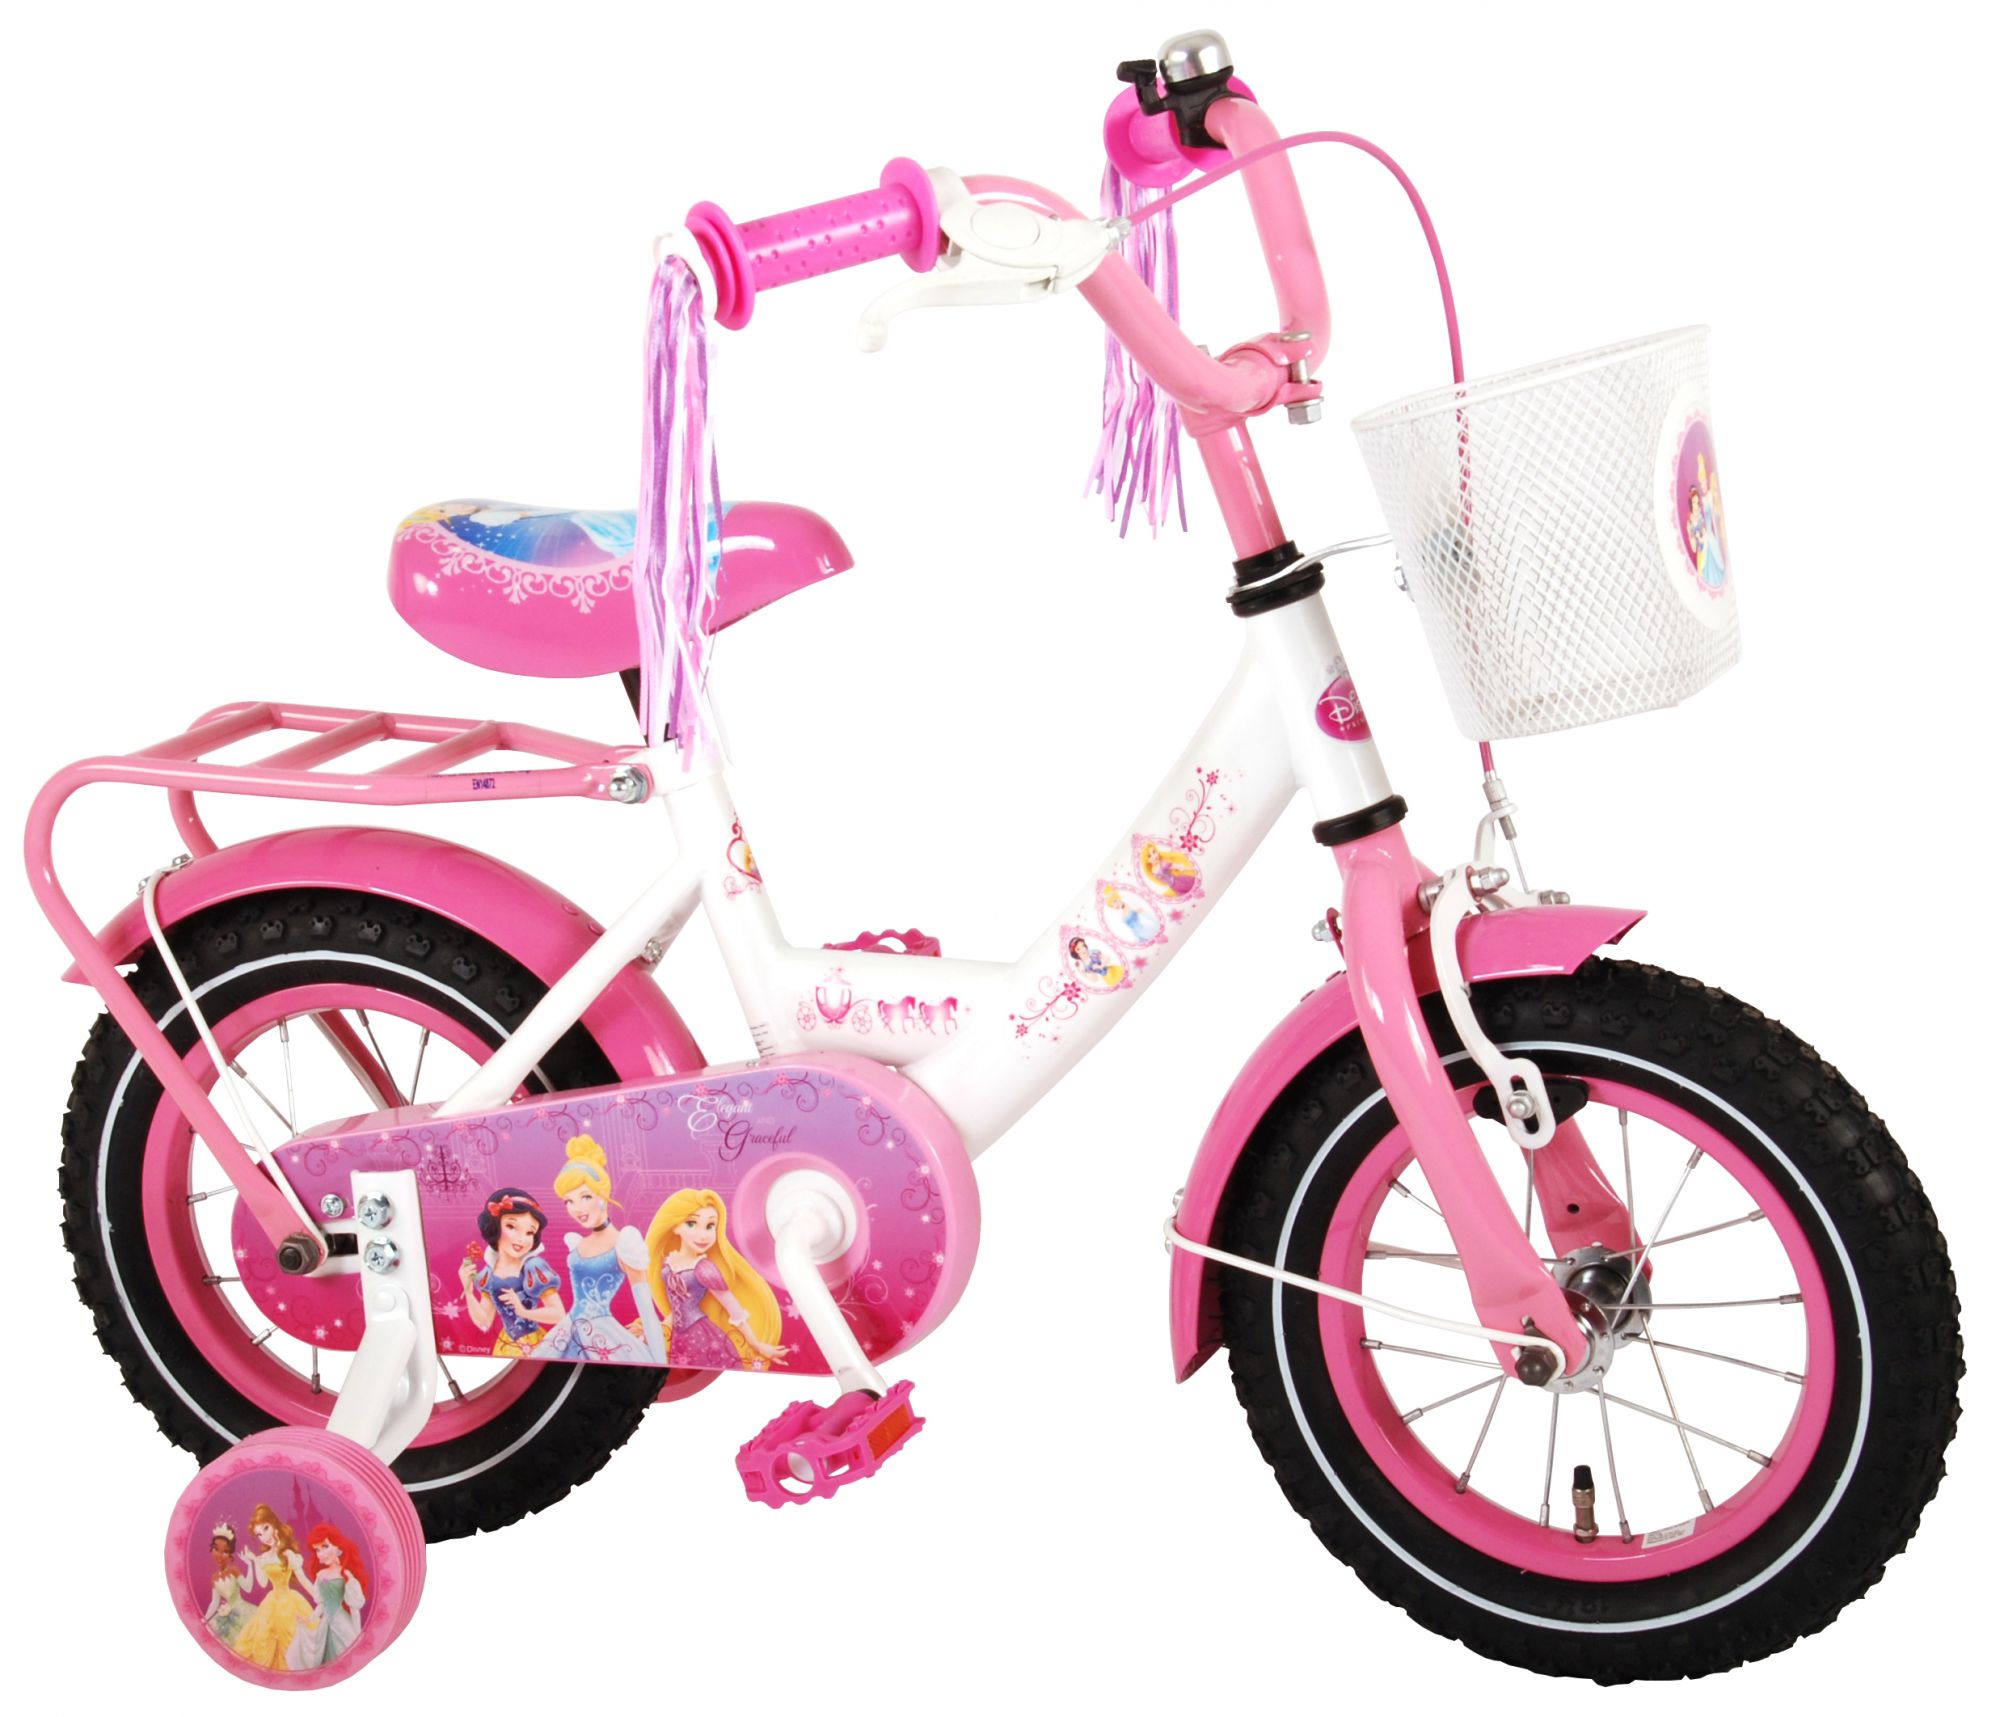 12 inch girls bike